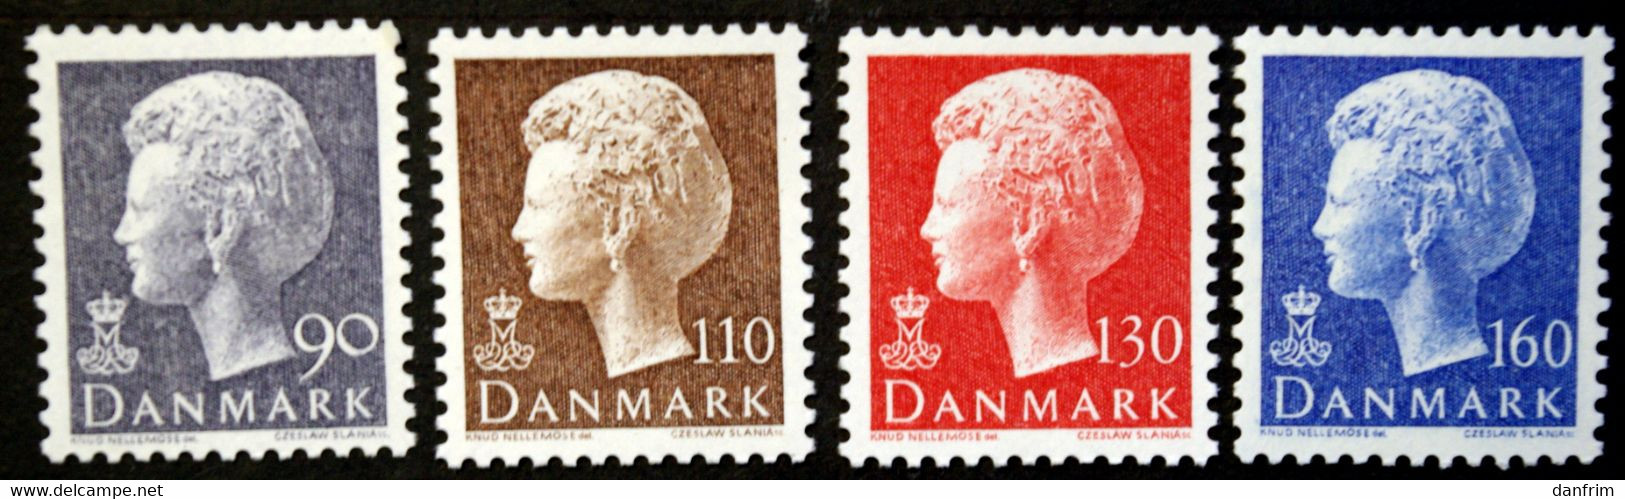 Denmark 1979   Queen Margrethe II  MiNr.680-83  MNH (**)  ( Lot  A 287) - Nuovi